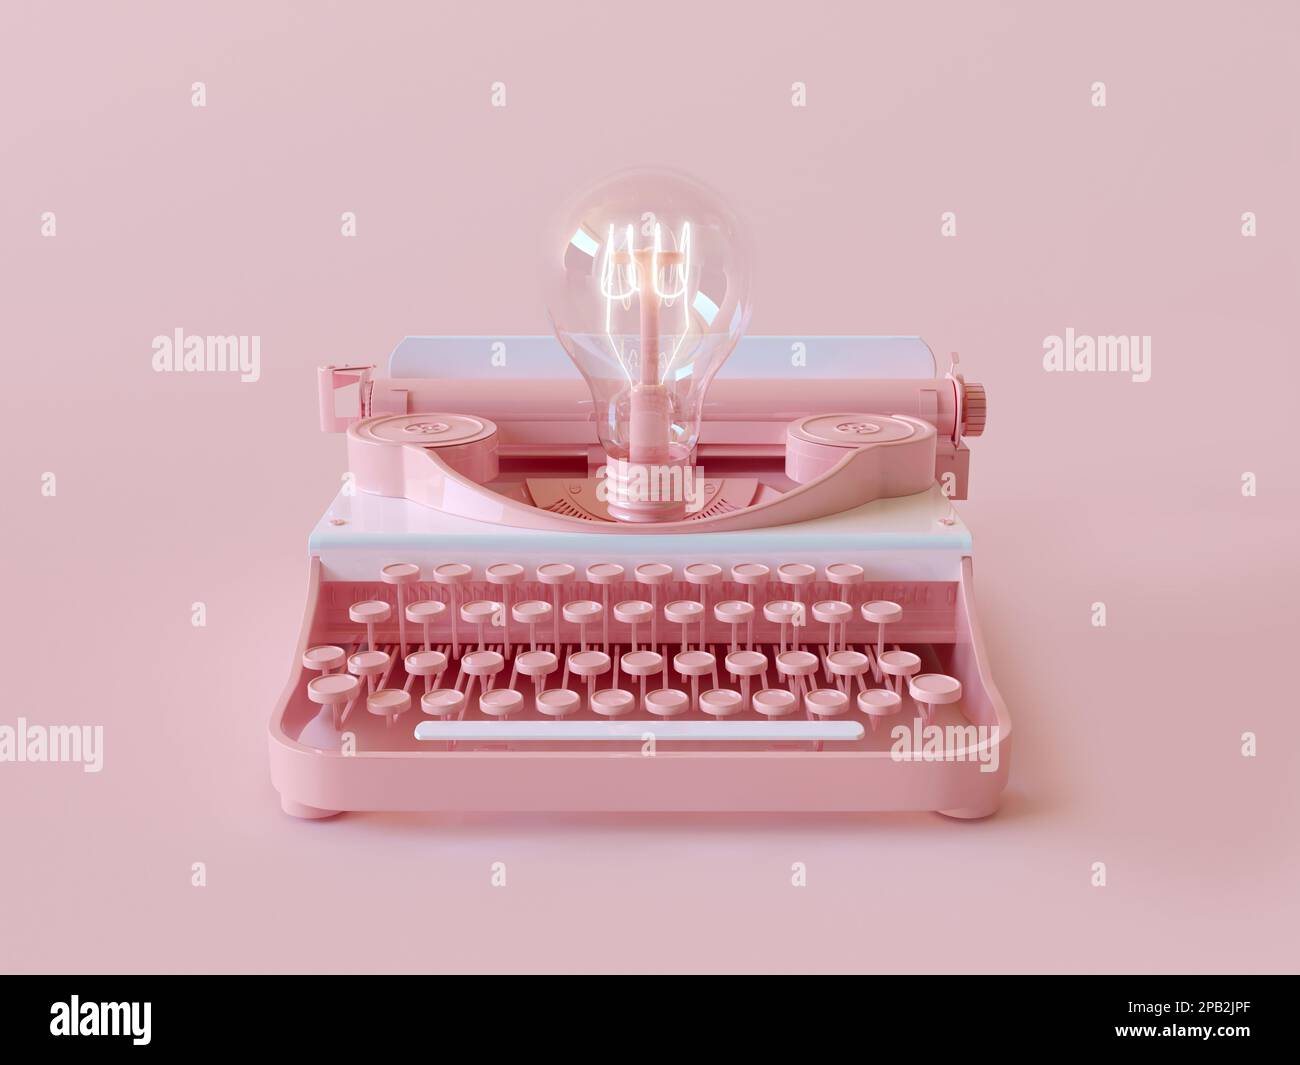 Retro typewriter with light bulb lighting. Copy space minimal concept of idea, innovation, genius, writer, plot, journalism, inspiration. 3d render Stock Photo